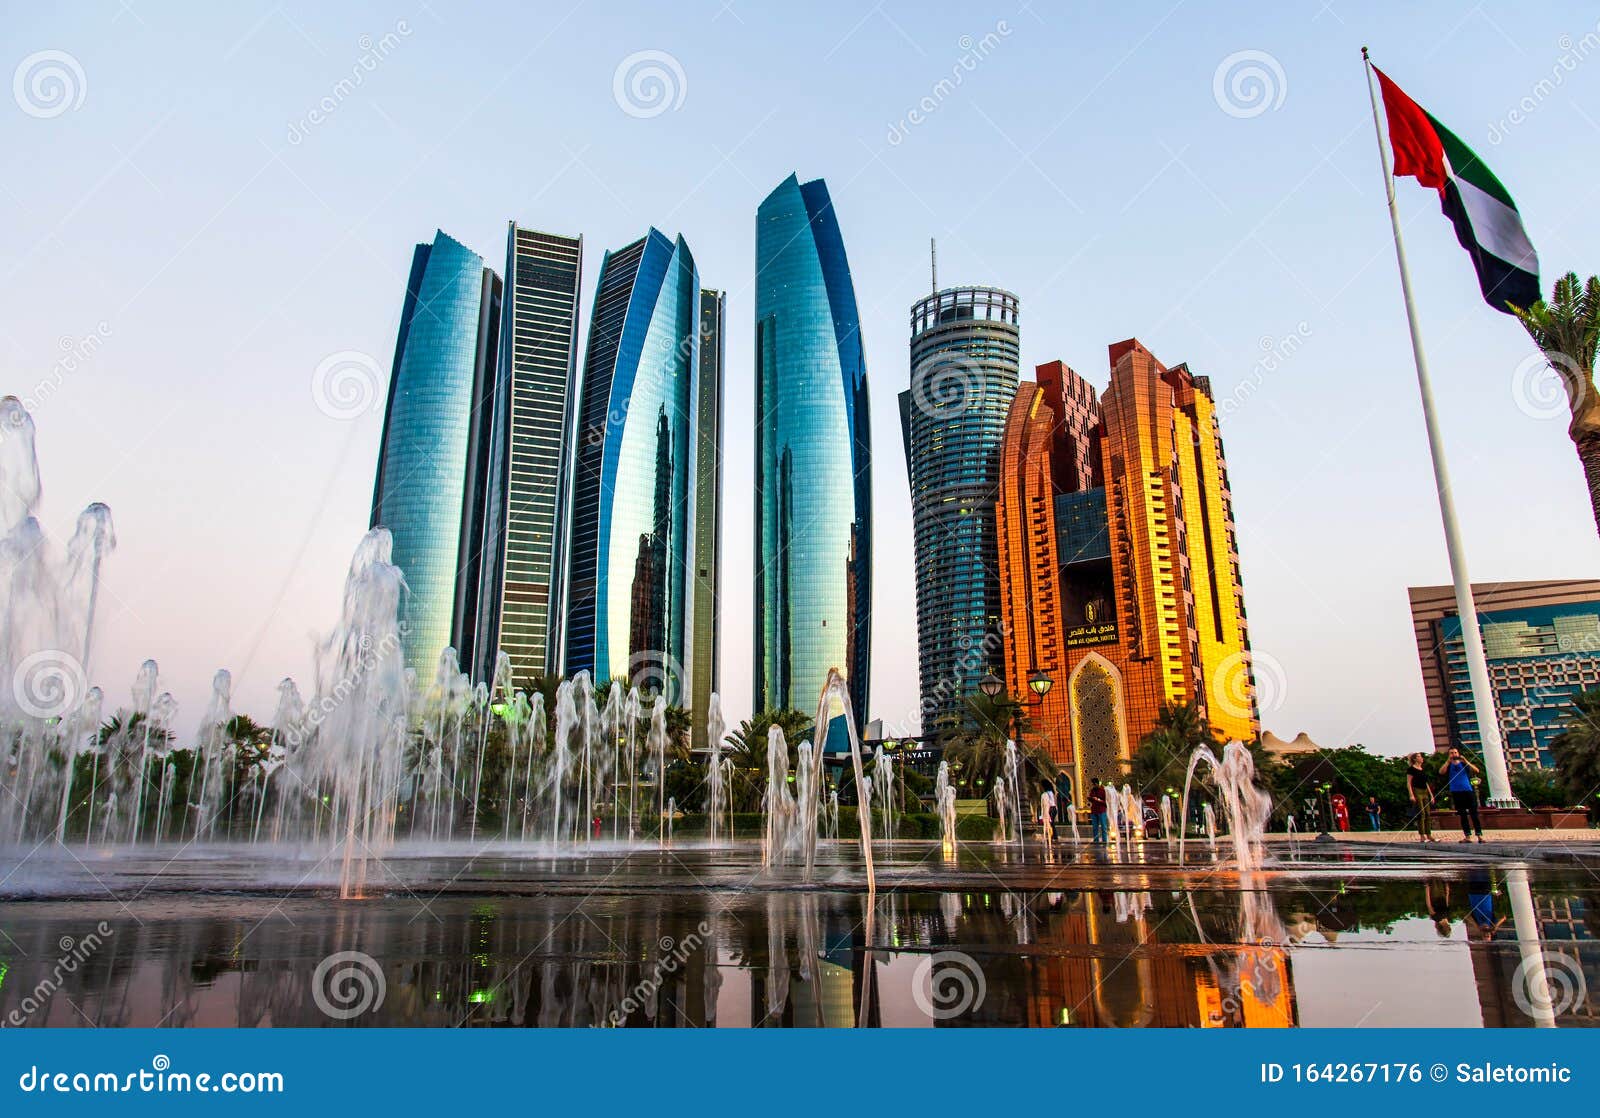 abu dhabi, united arab emirates - november 1, 2019: etihad towers skyscrapers at the downtown abu dhabi